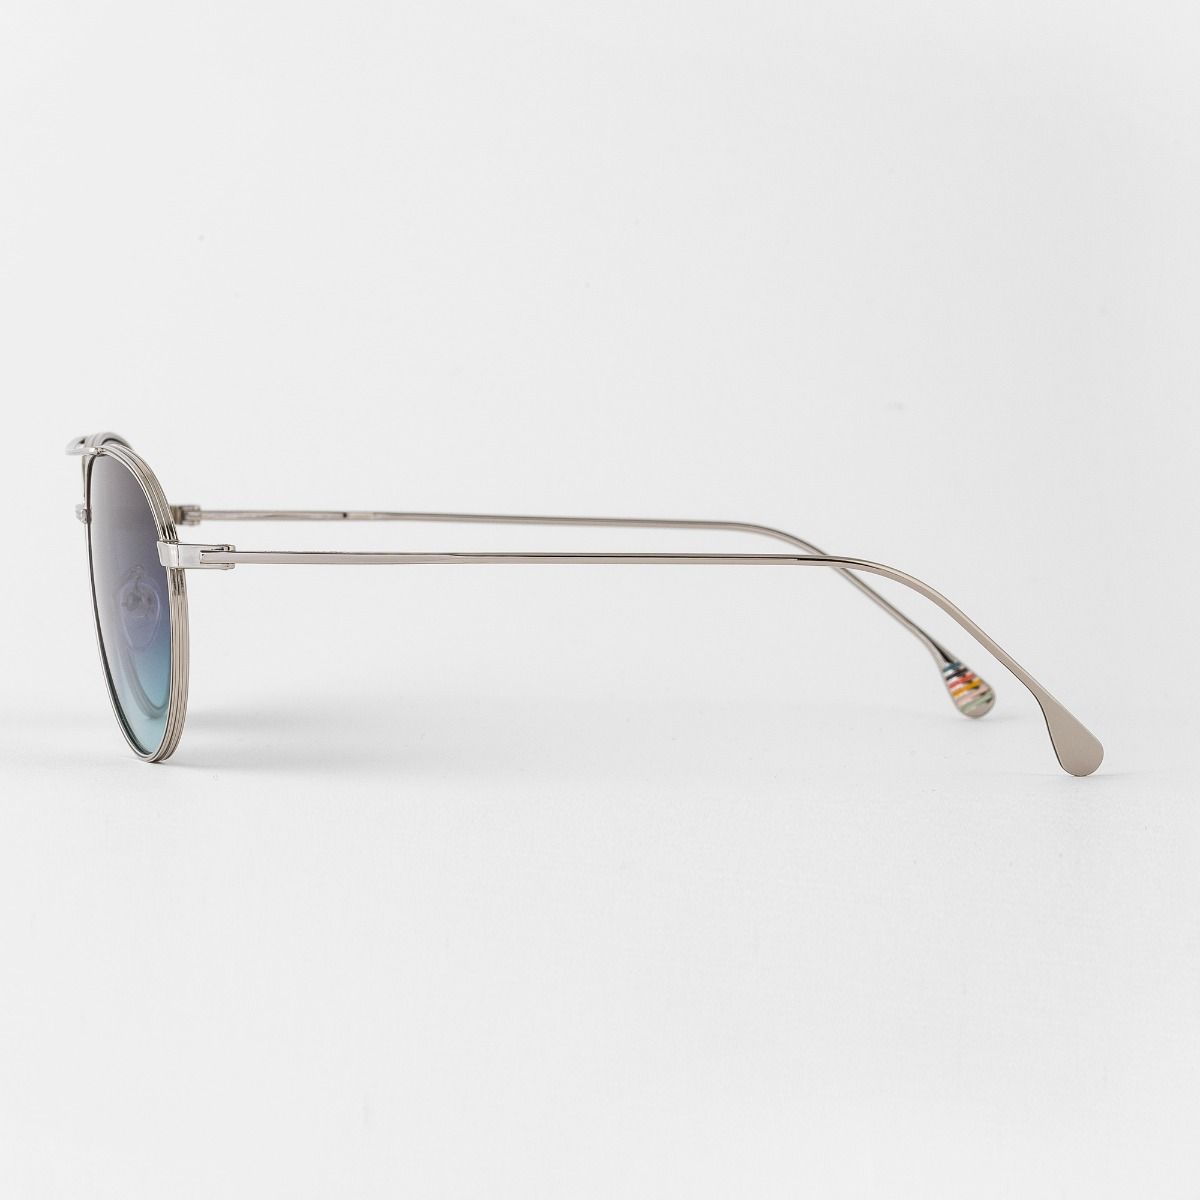 Paul Smith Felix Aviator Sunglasses